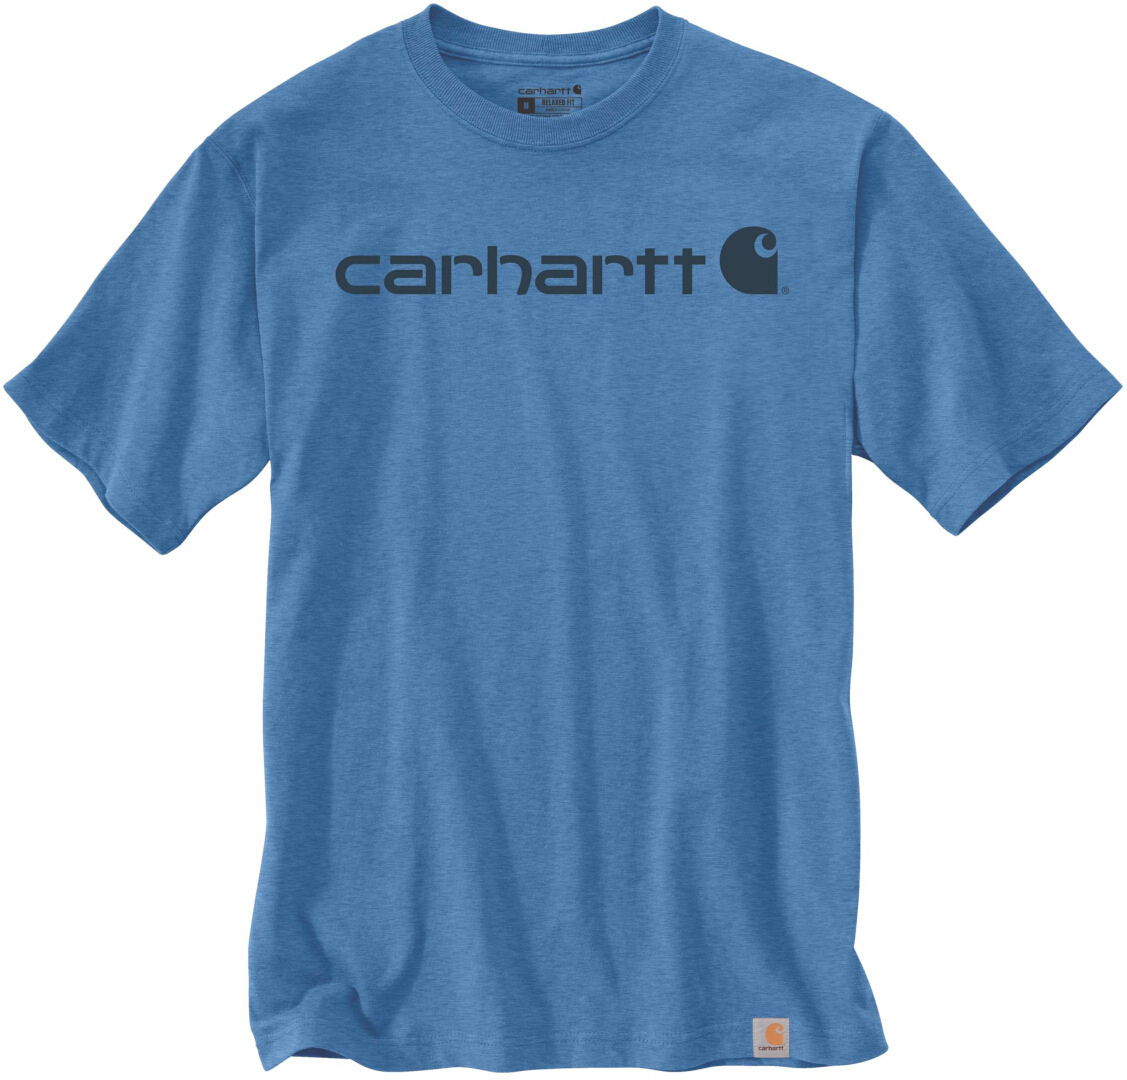 Carhartt EMEA Core Logo Workwear Short Sleeve T-Shirt, blue, Size S, blue, Size S